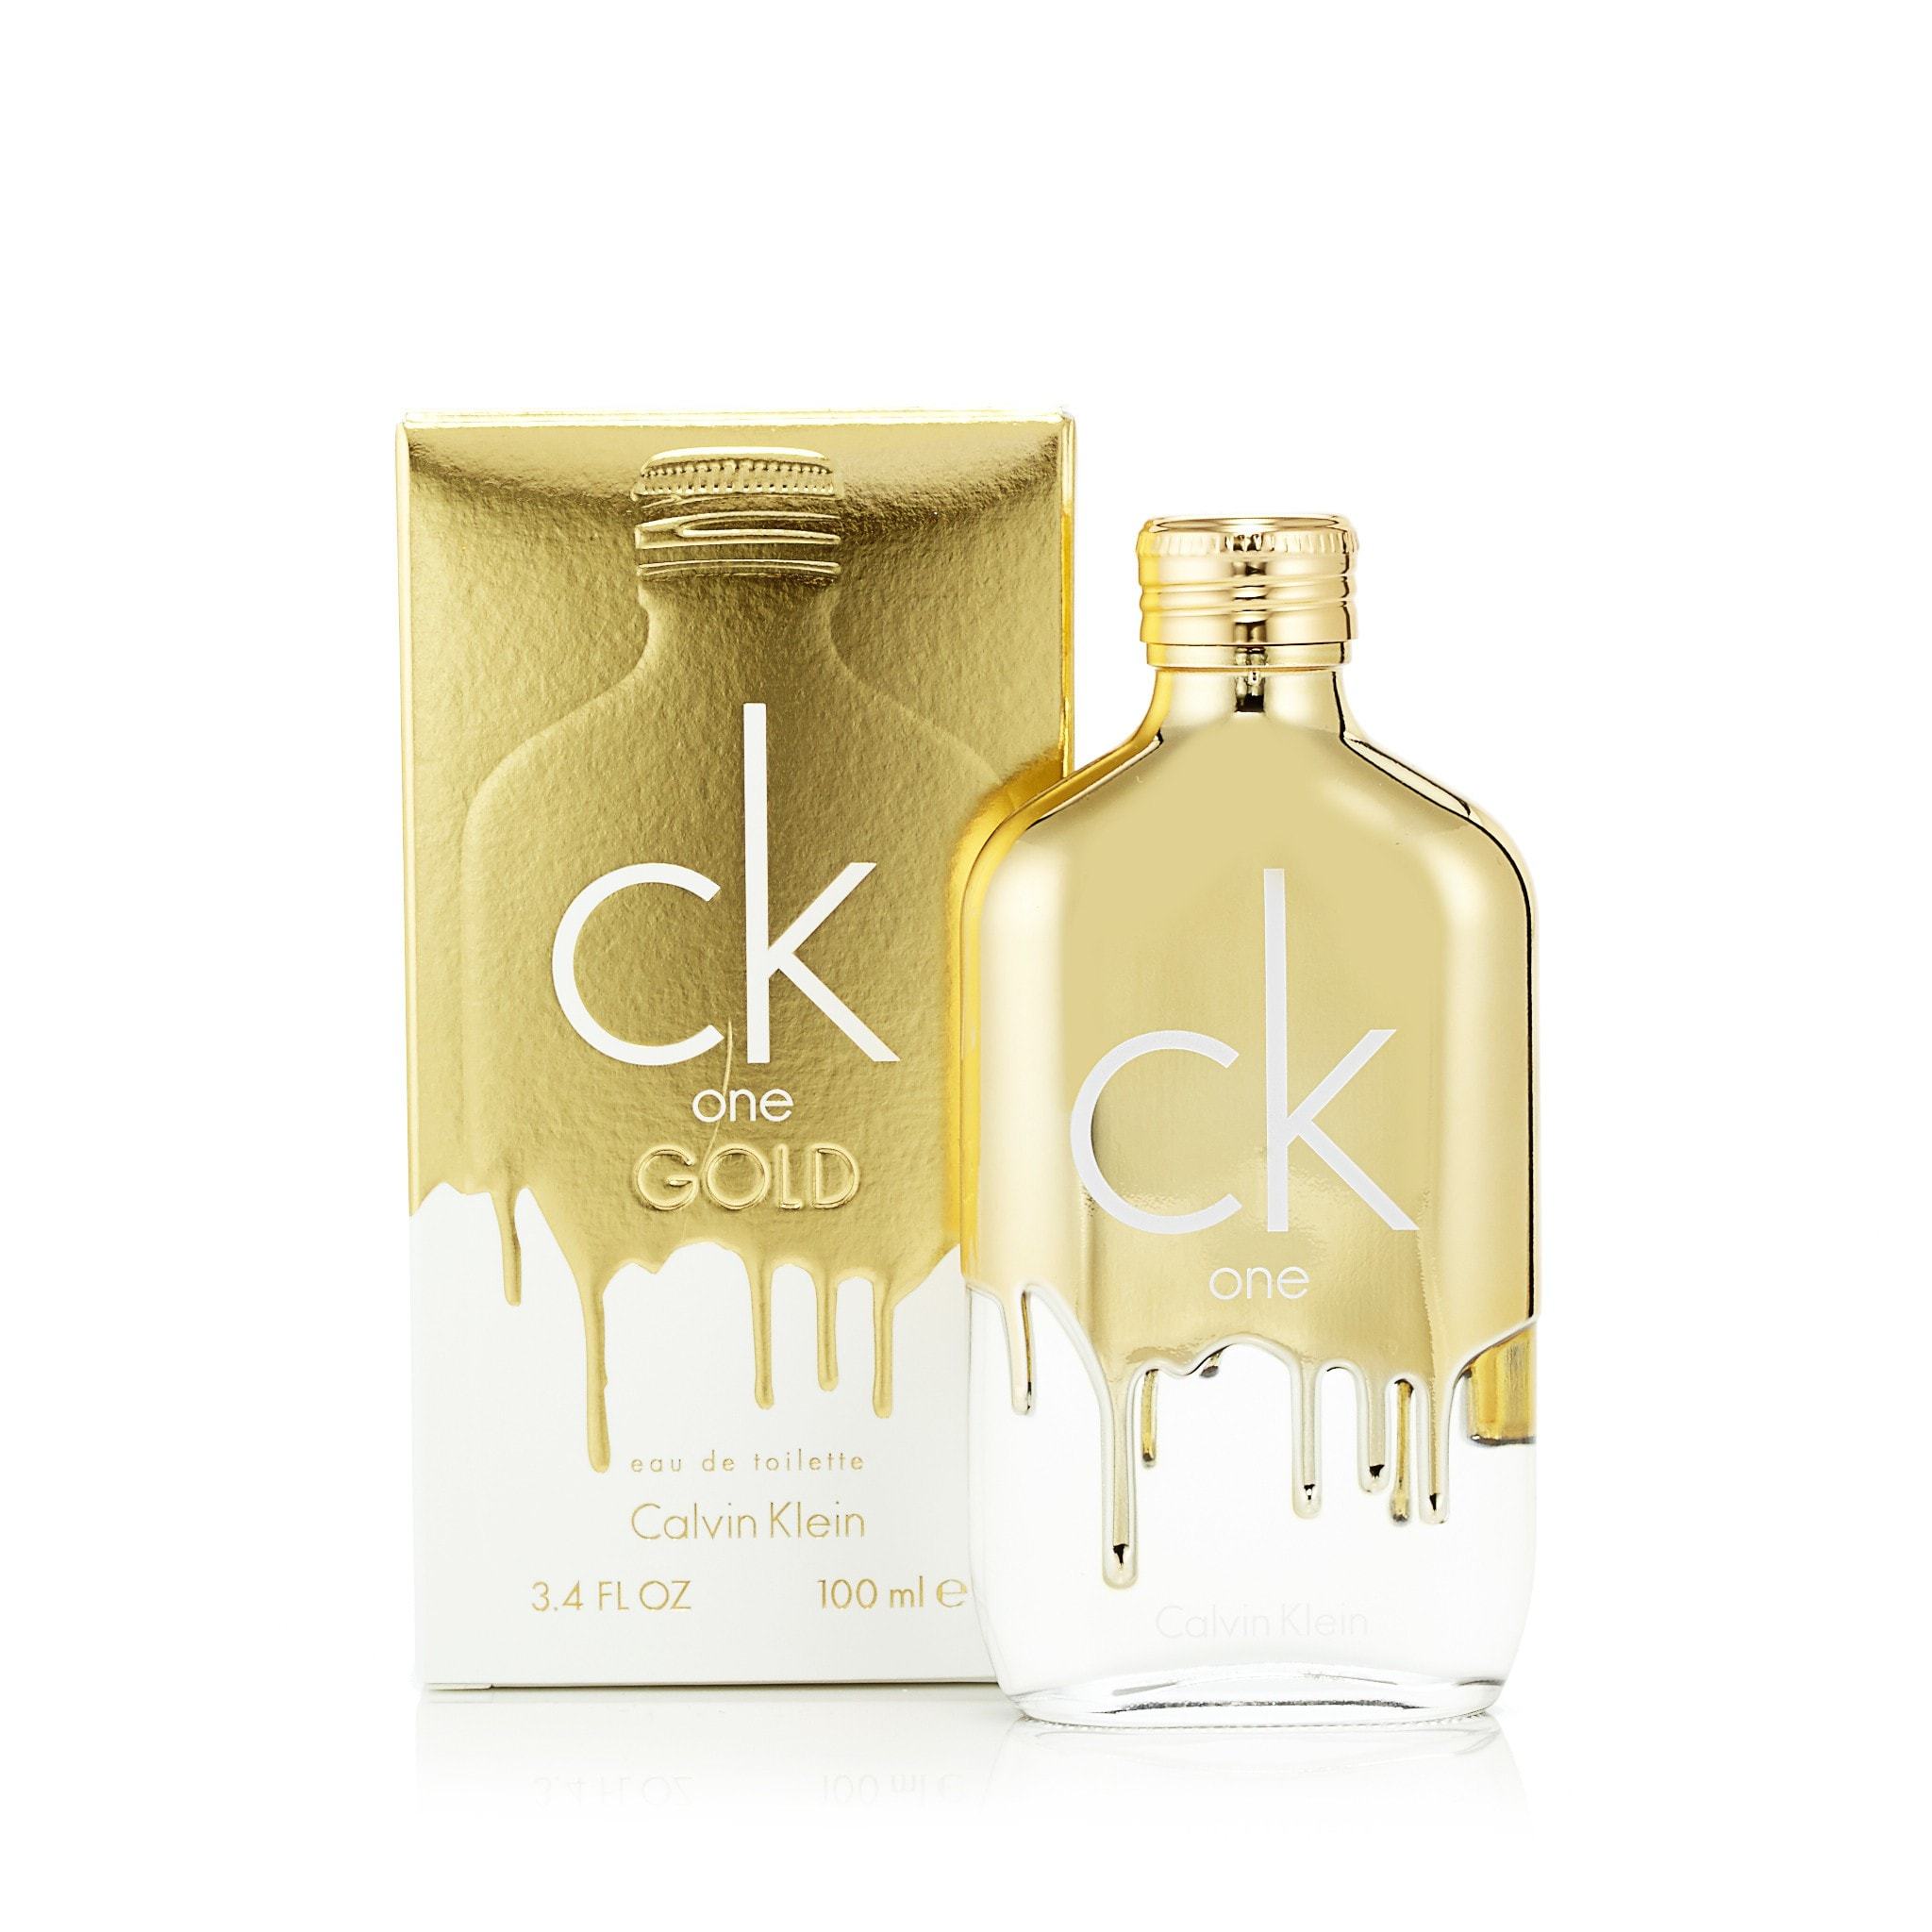 Calvin Klein Beauty One Eau De Toilette Perfume Spray - 6.7 oz bottle